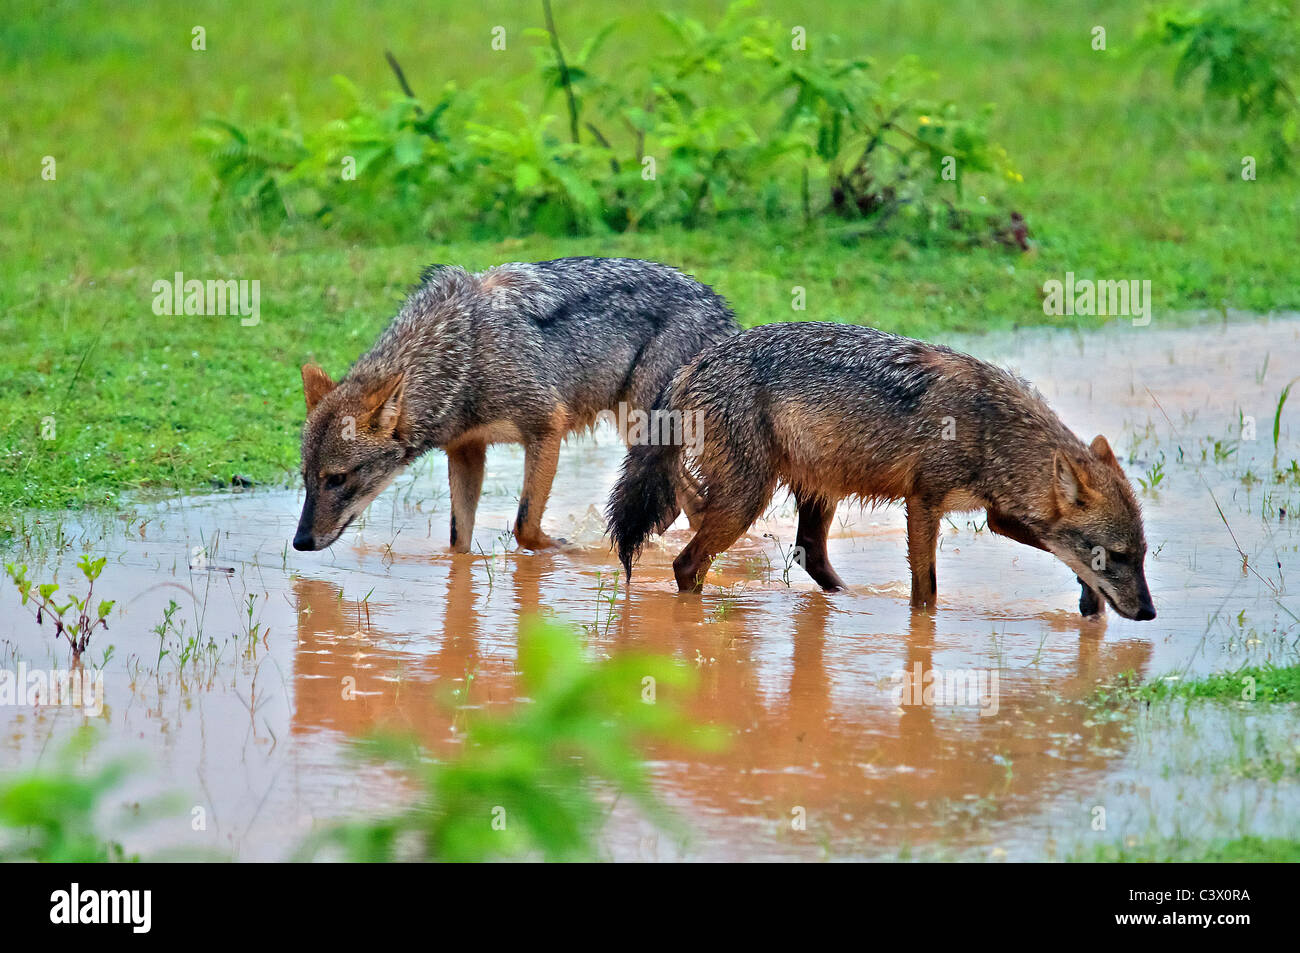 Two jackals wading in stream Yala National Park Southern Sri Lanka Stock Photo